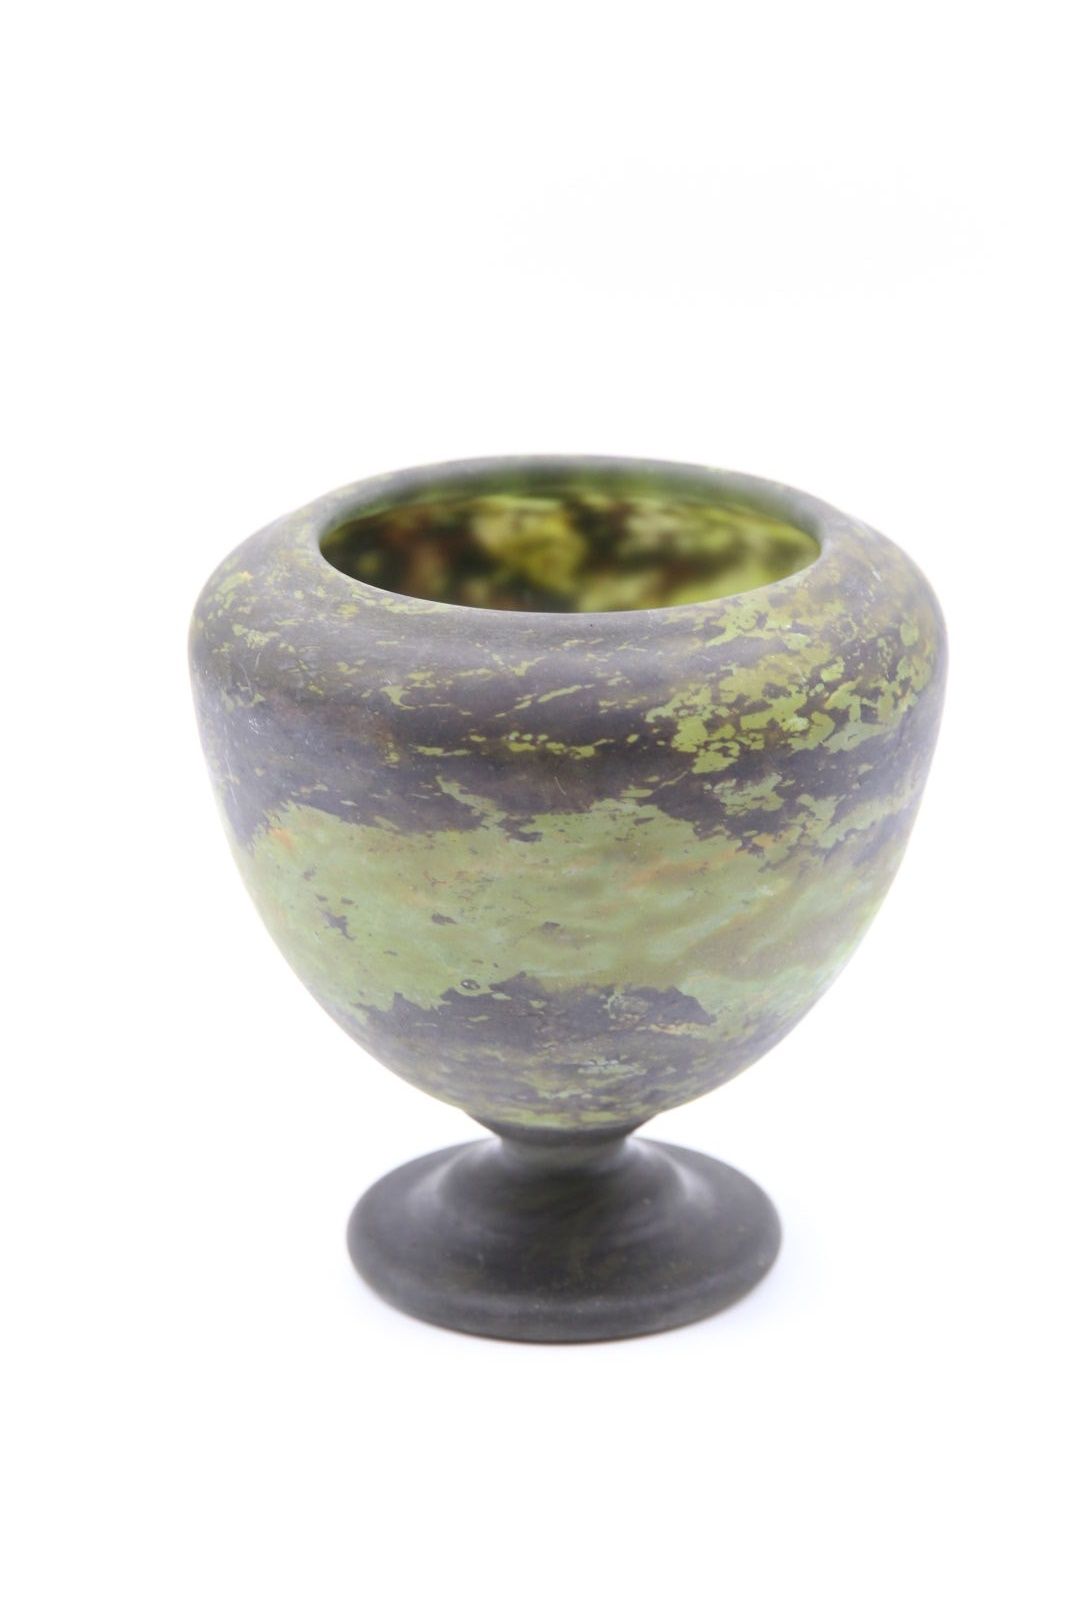 Null DAUM, Nancy.

绿色、黑色和黄色大理石花纹玻璃的花瓶。

圆形基座。

签名。

高：14厘米。长：12厘米。